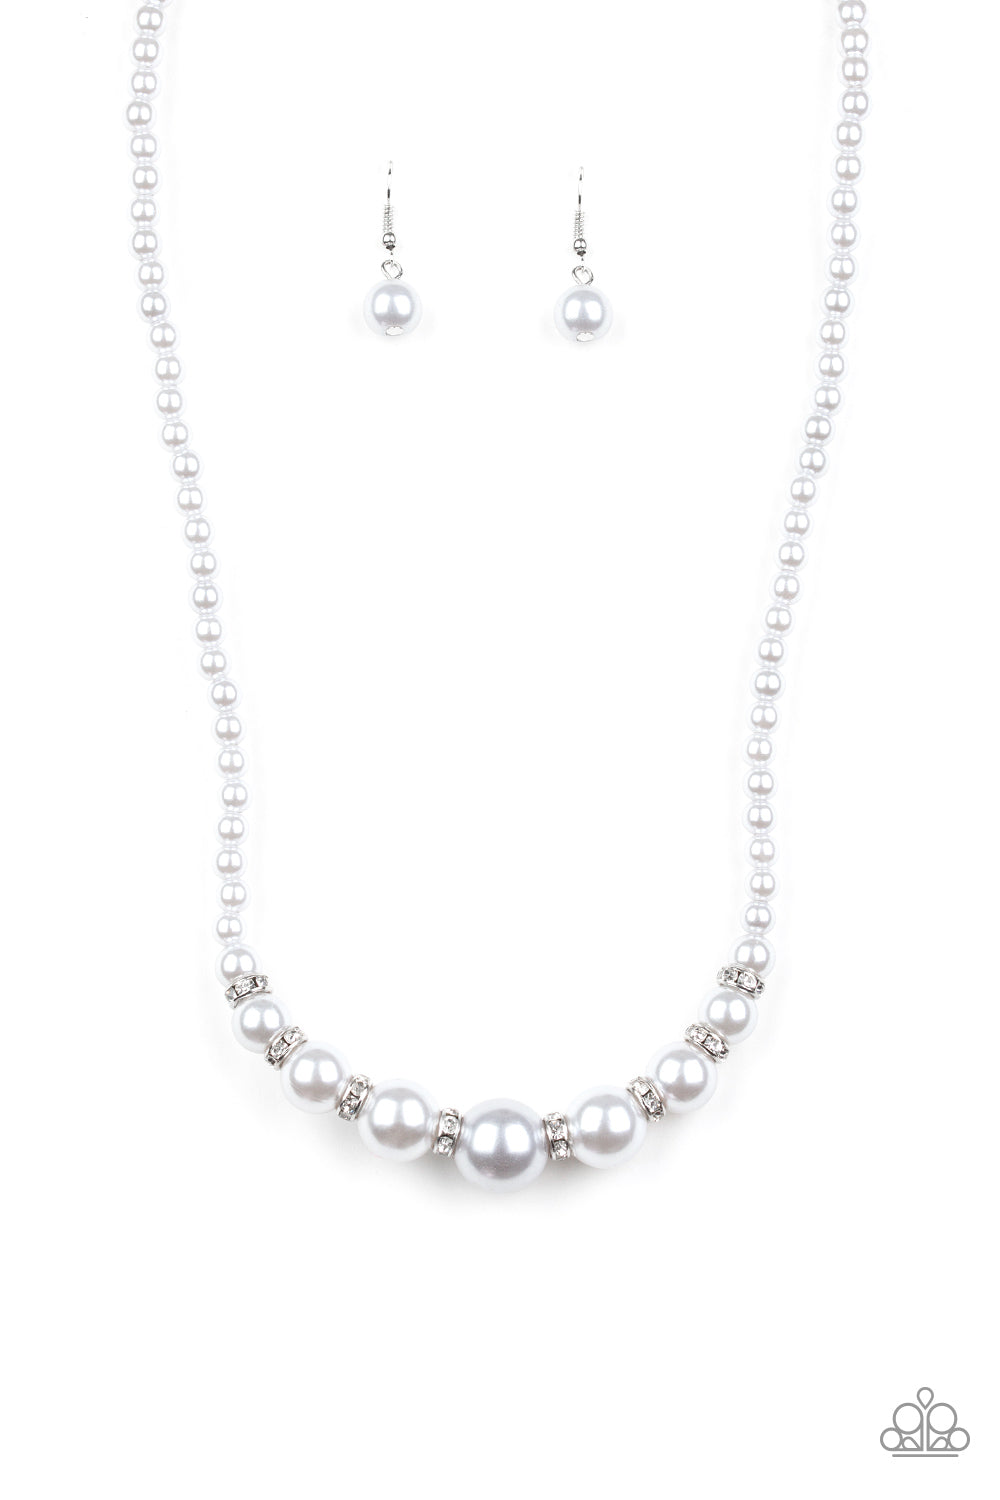 SoHo Sweetheart - silver - Paparazzi necklace – JewelryBlingThing